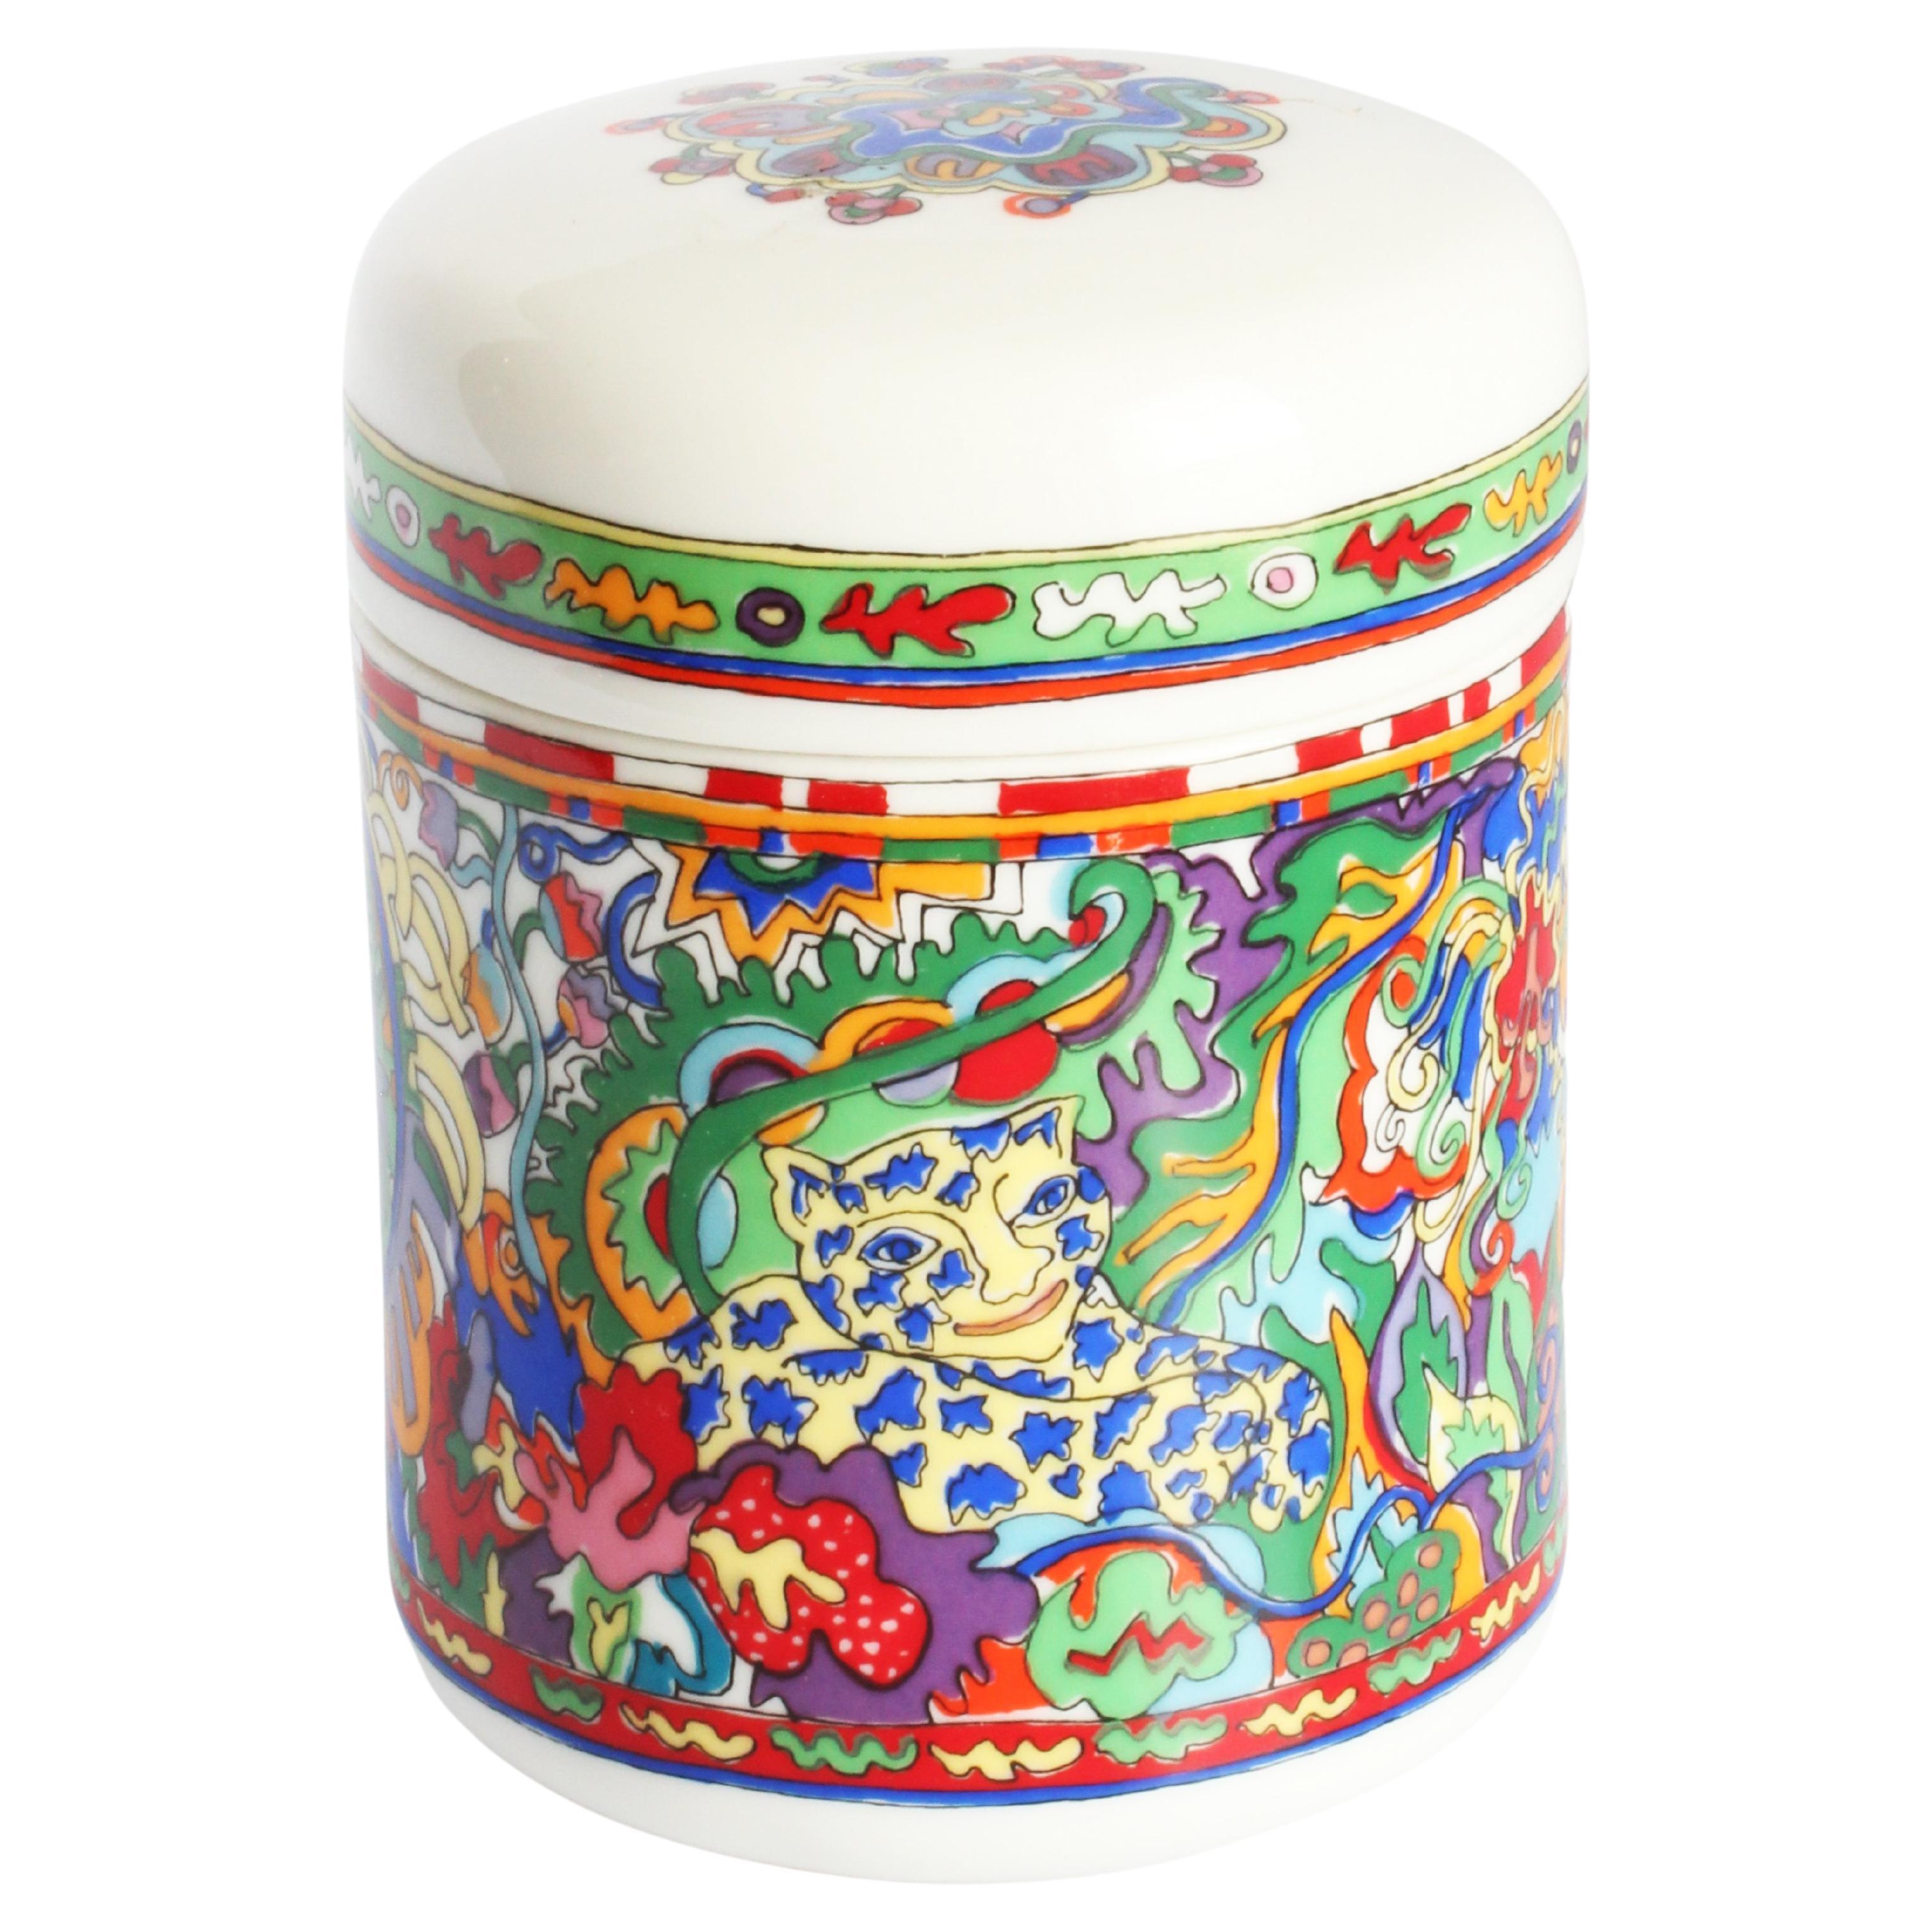 Yves Saint Laurent Parfum Rive Gauche Ceramic Vanity Jar Vintage Home Decor 